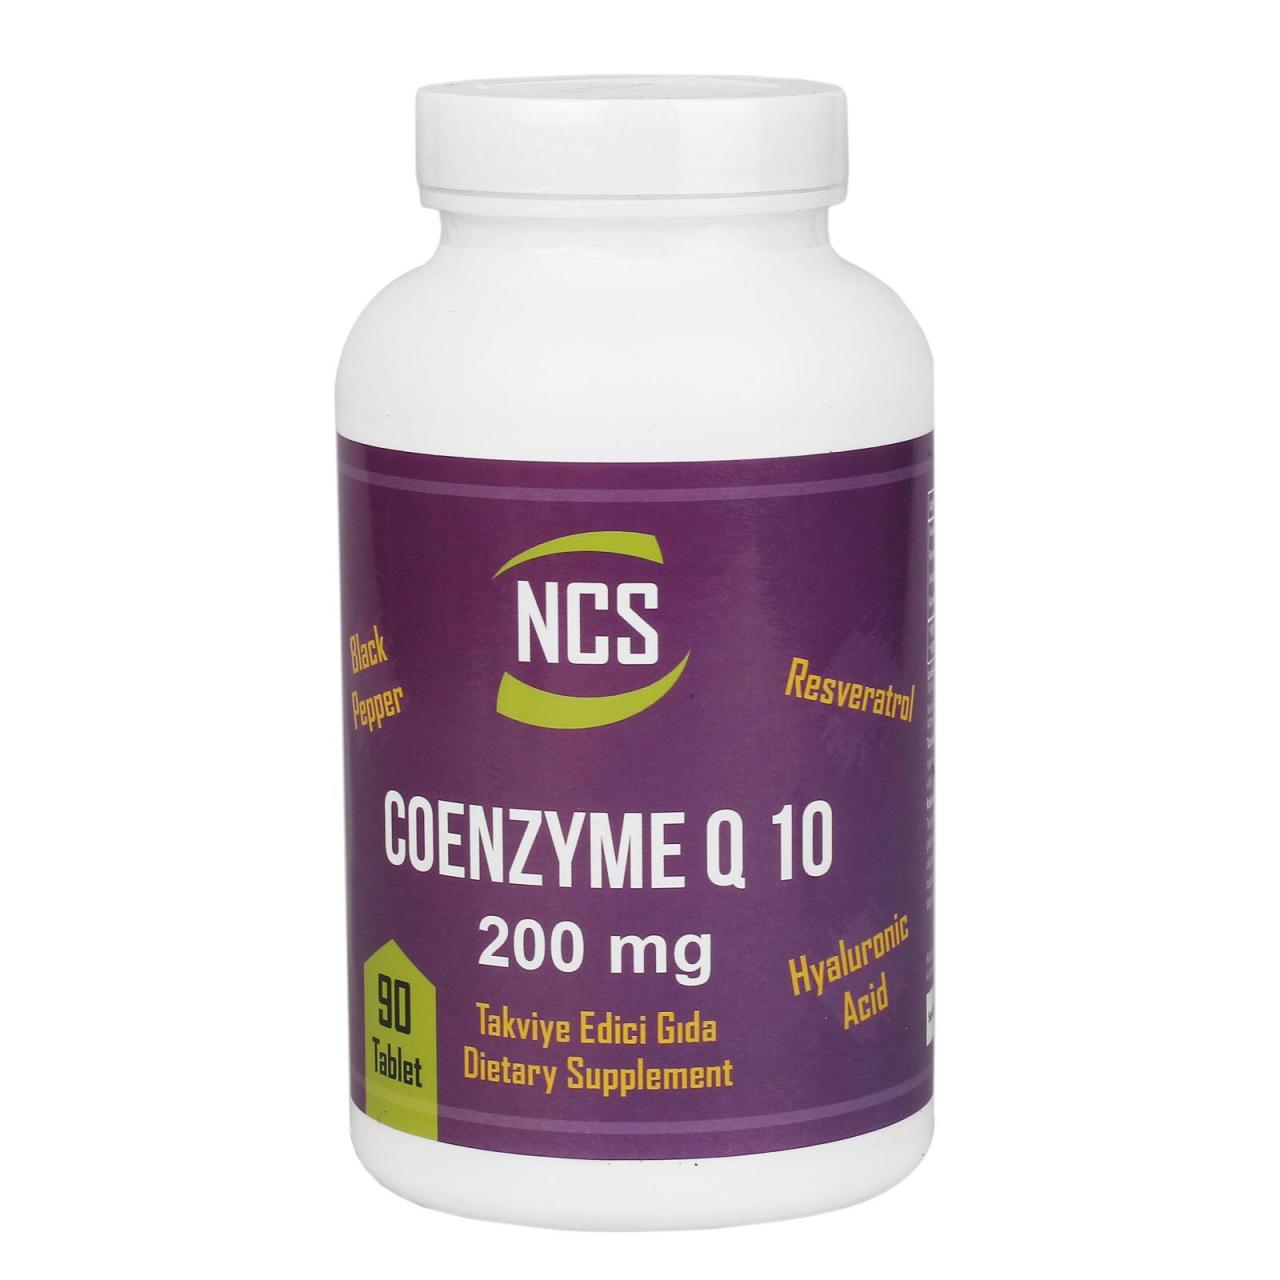 Ncs Coenzyme Q-10 200 mg 90 tablet